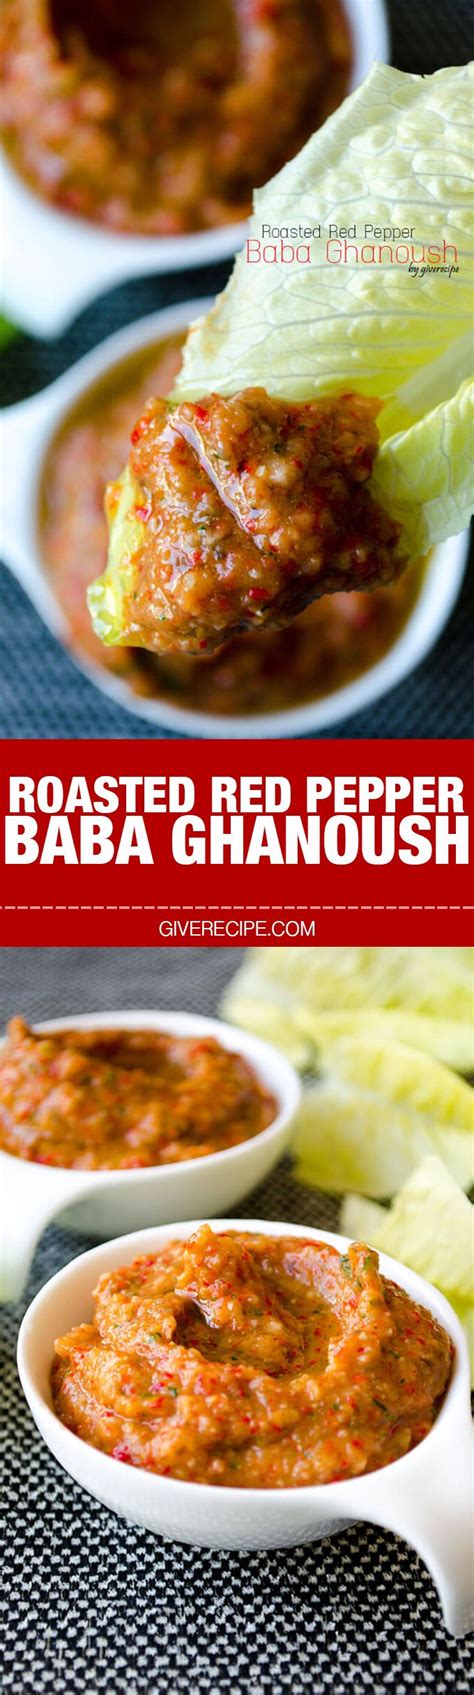 Turkish Baba Ganoush Without Tahini | Recipe | Stuffed peppers, Recipes, Food